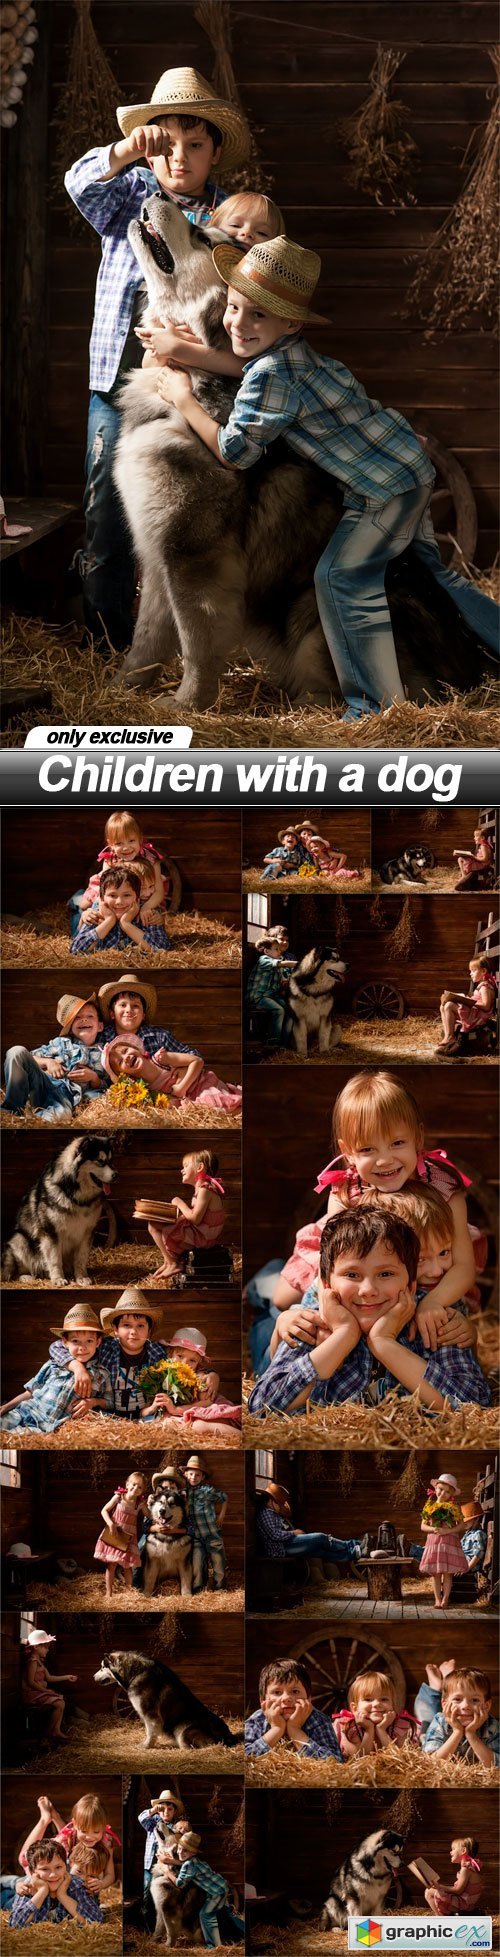 Children with a dog - 15 UHQ JPEG